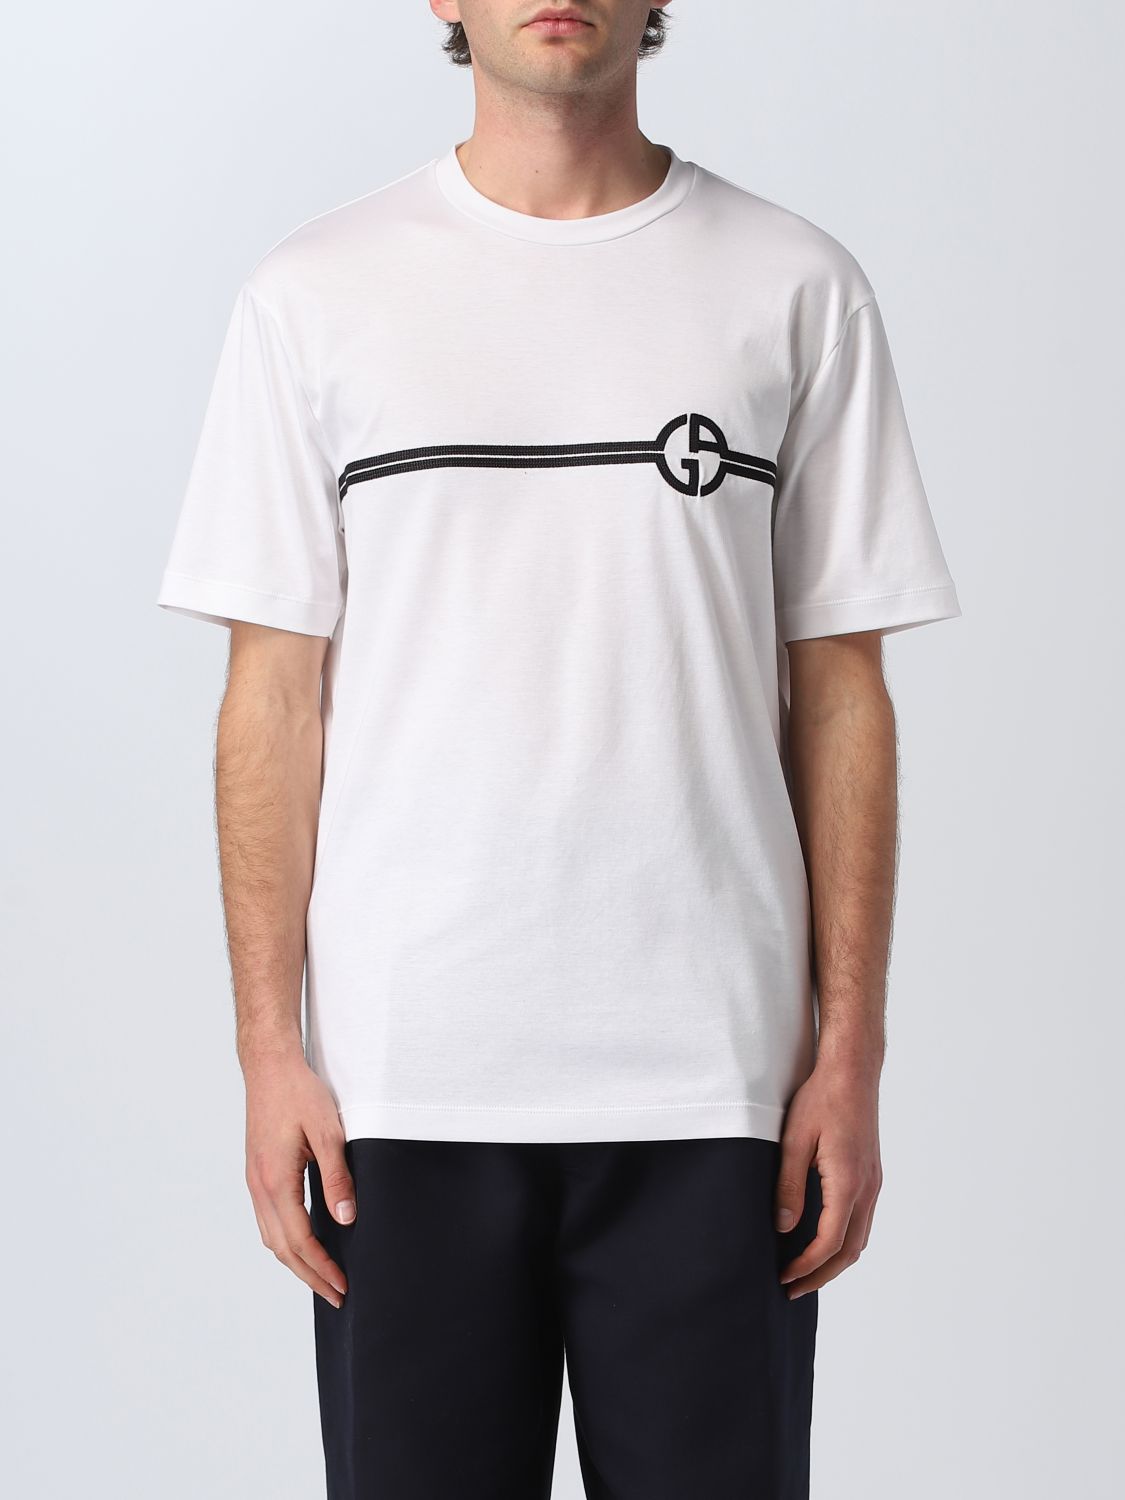 Premonition Kunde blive irriteret GIORGIO ARMANI: t-shirt for man - White | Giorgio Armani t-shirt  3RSM66SJTKZ online on GIGLIO.COM